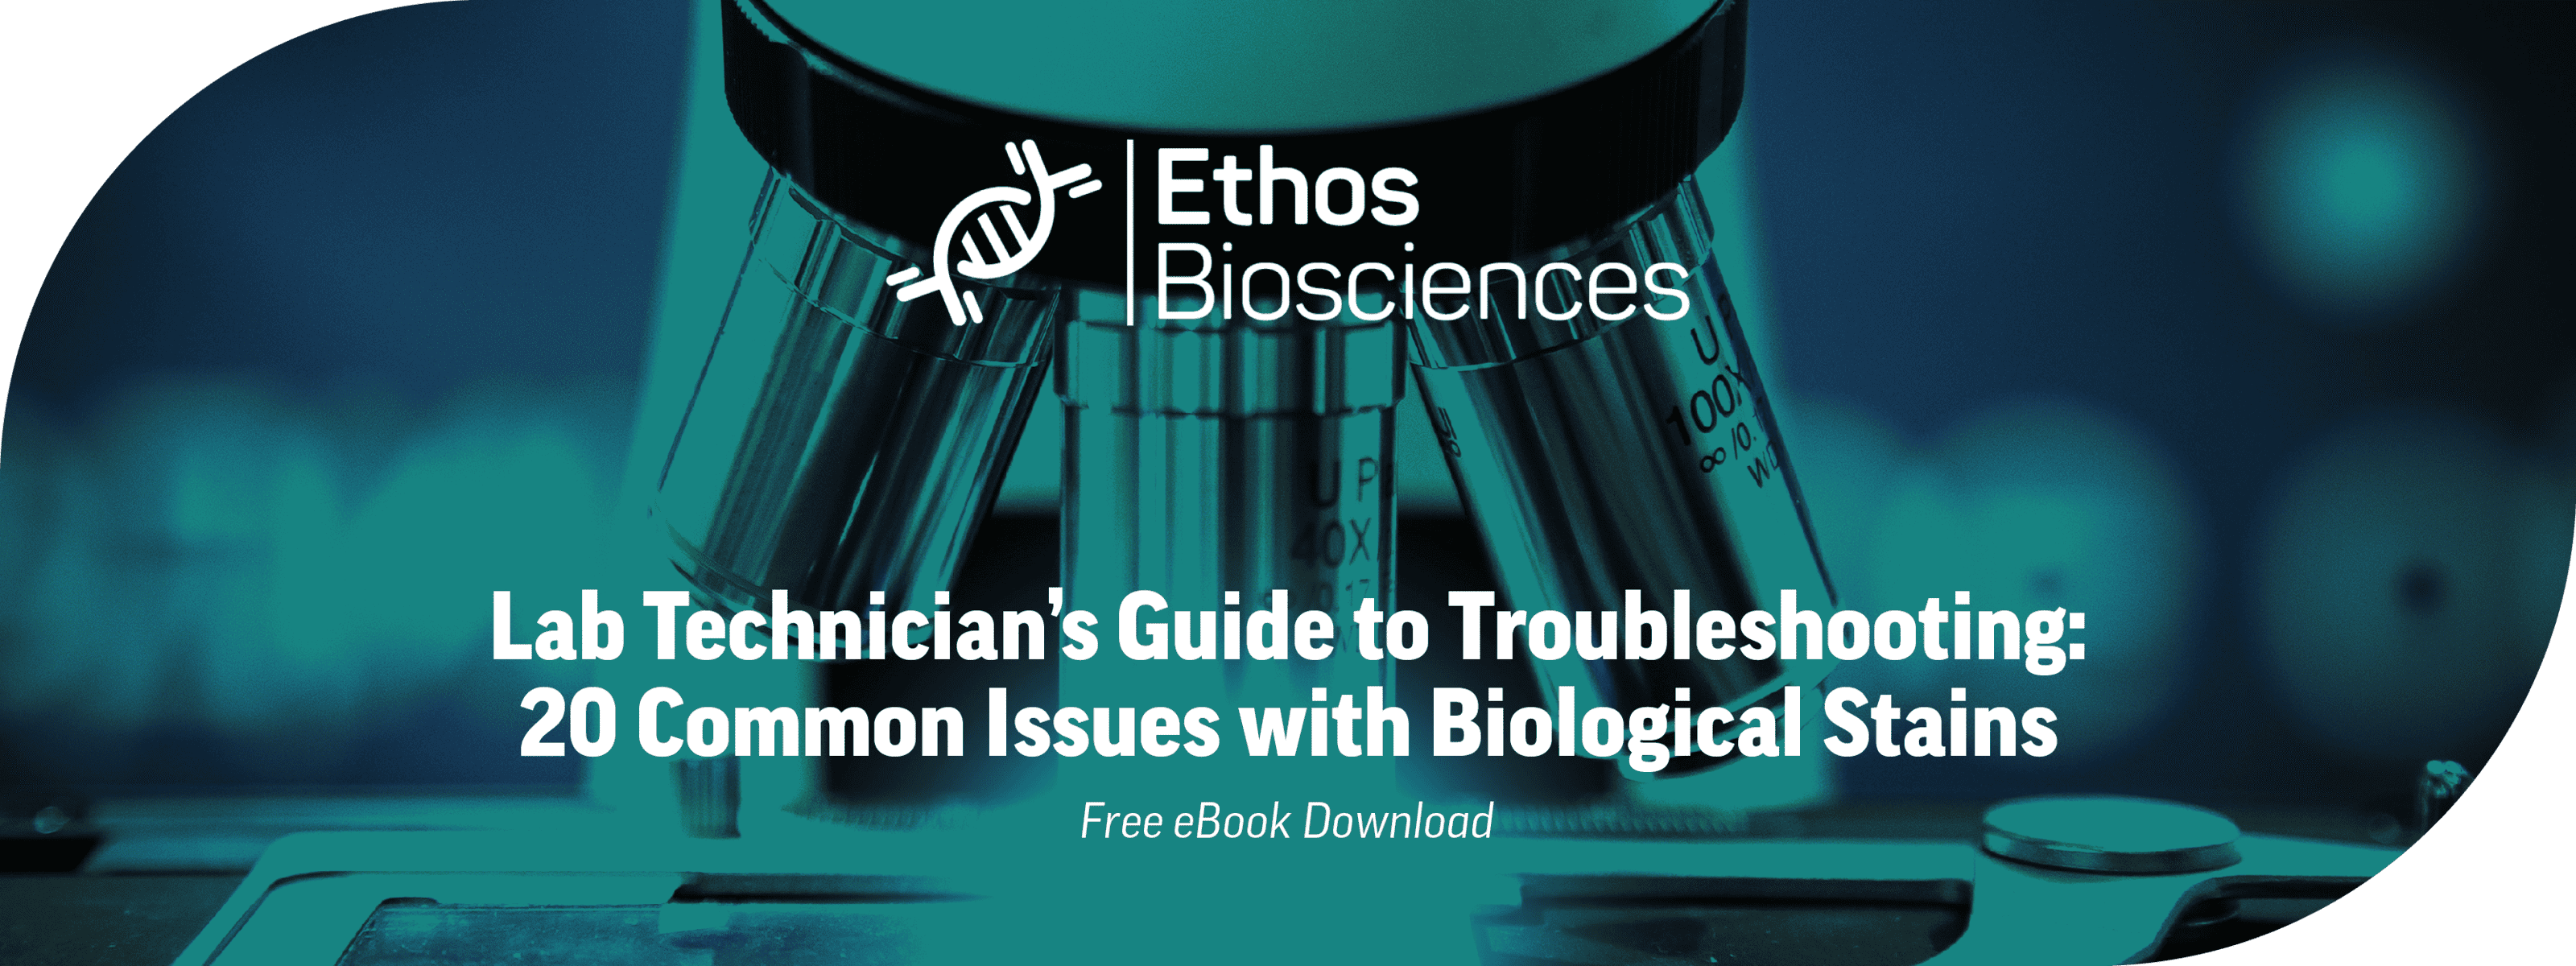 Ethos Biosciences eBook Troubleshooting guide